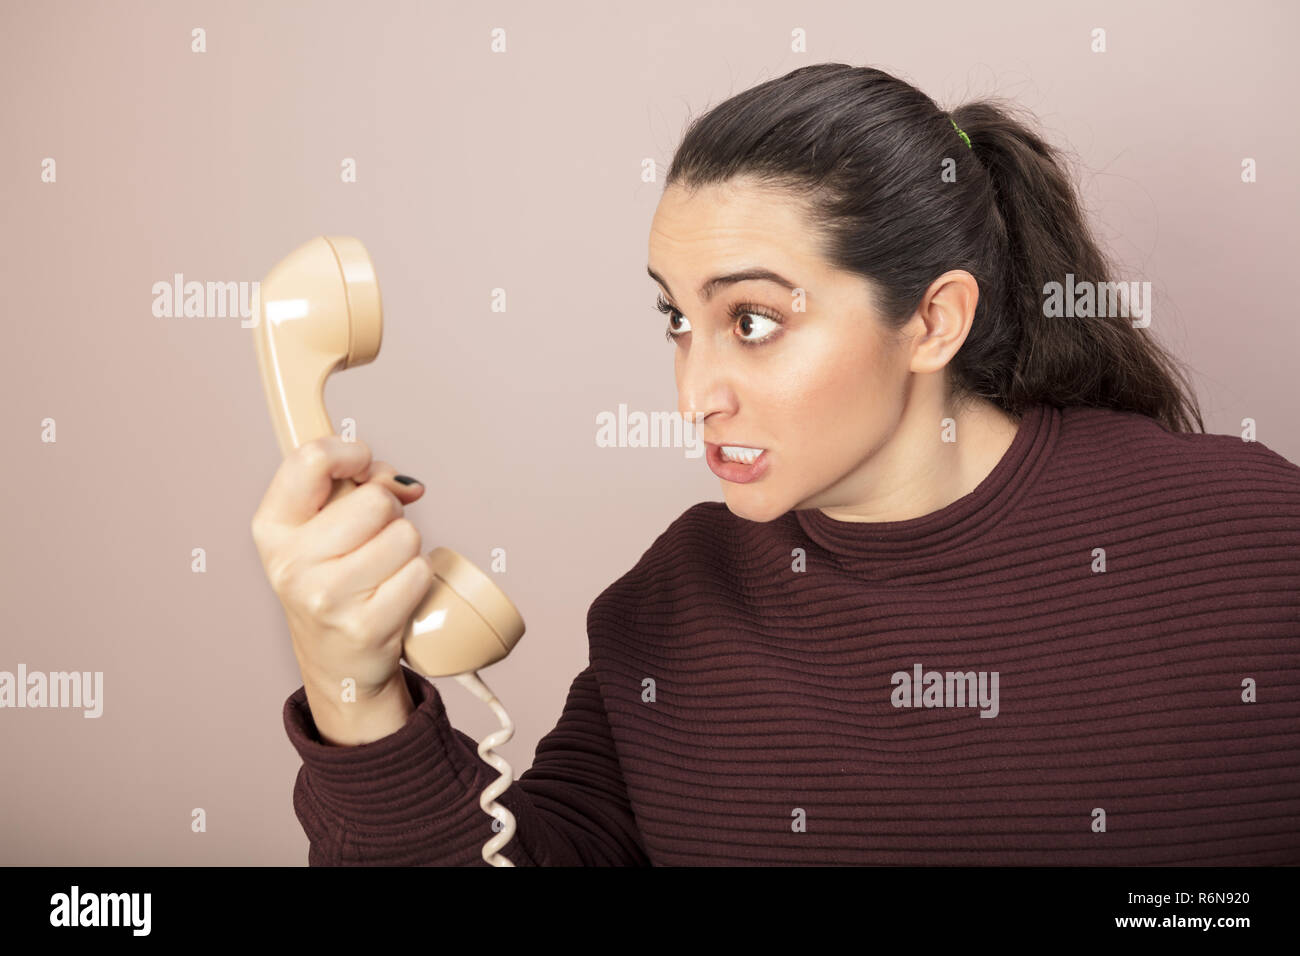 Angry irate woman gnashing her teeth Stock Photo